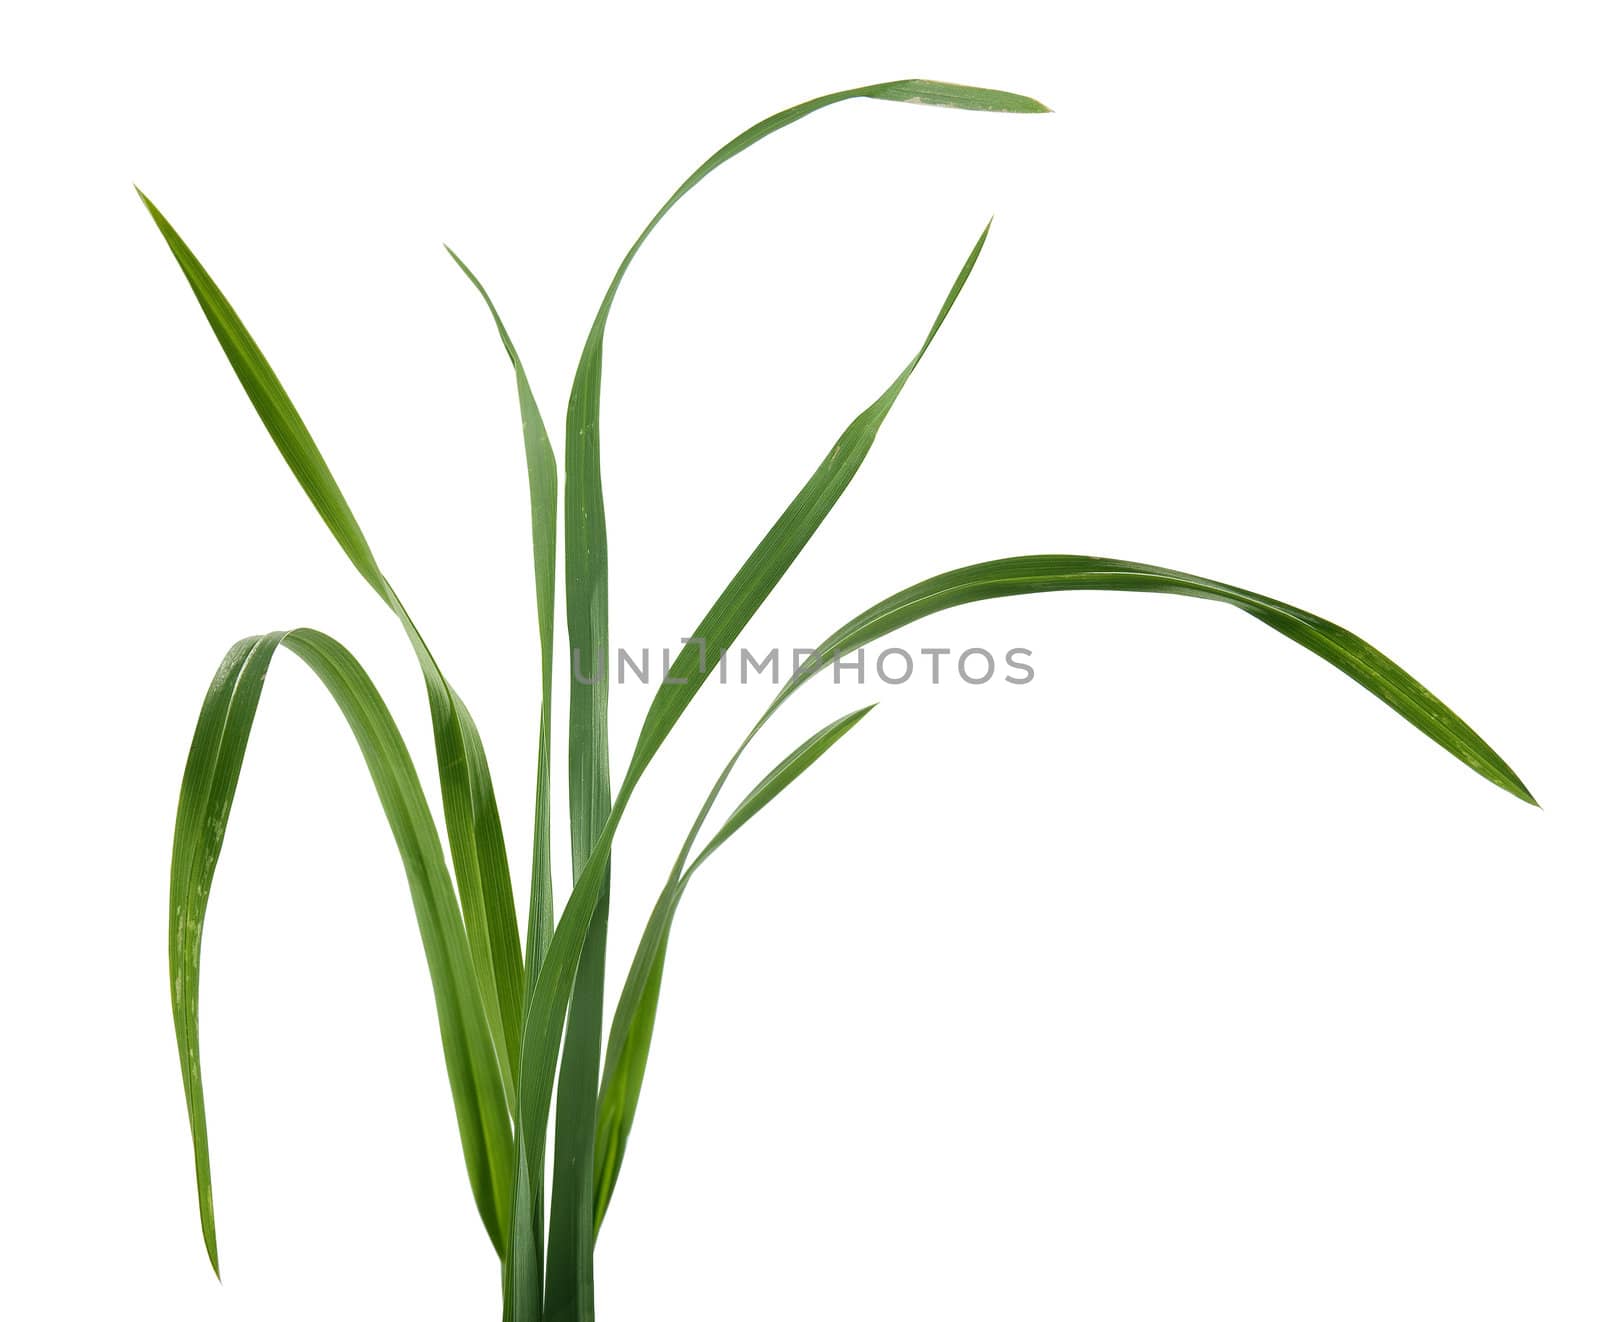 Green grass by Angorius